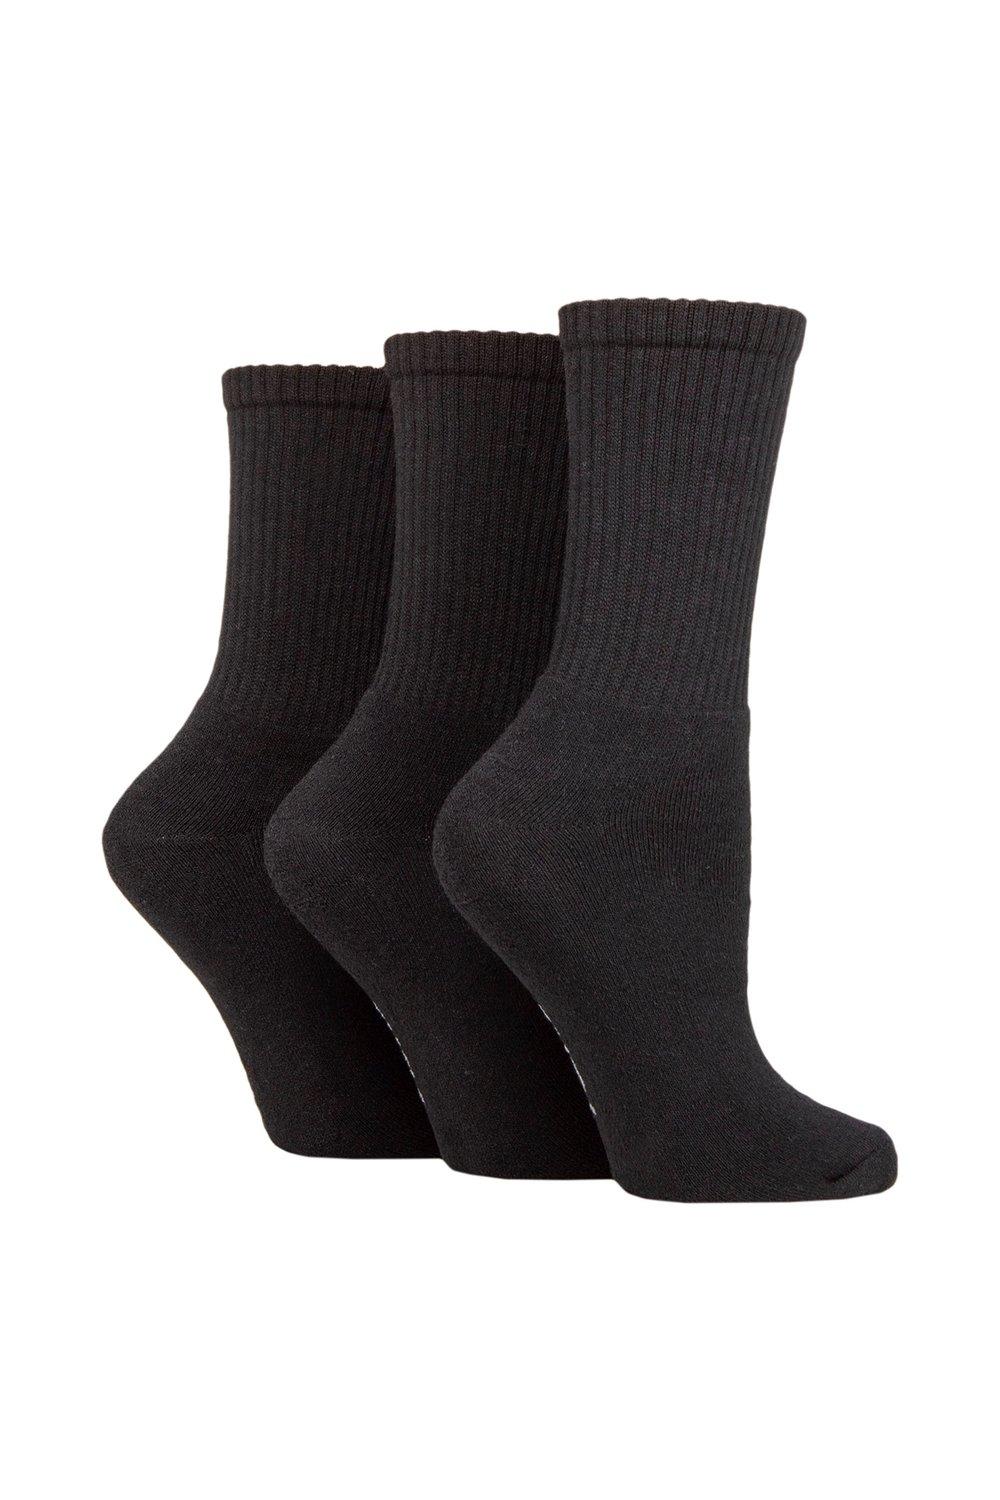 3 Pair 100% Recycled Plain Cotton Sports Socks